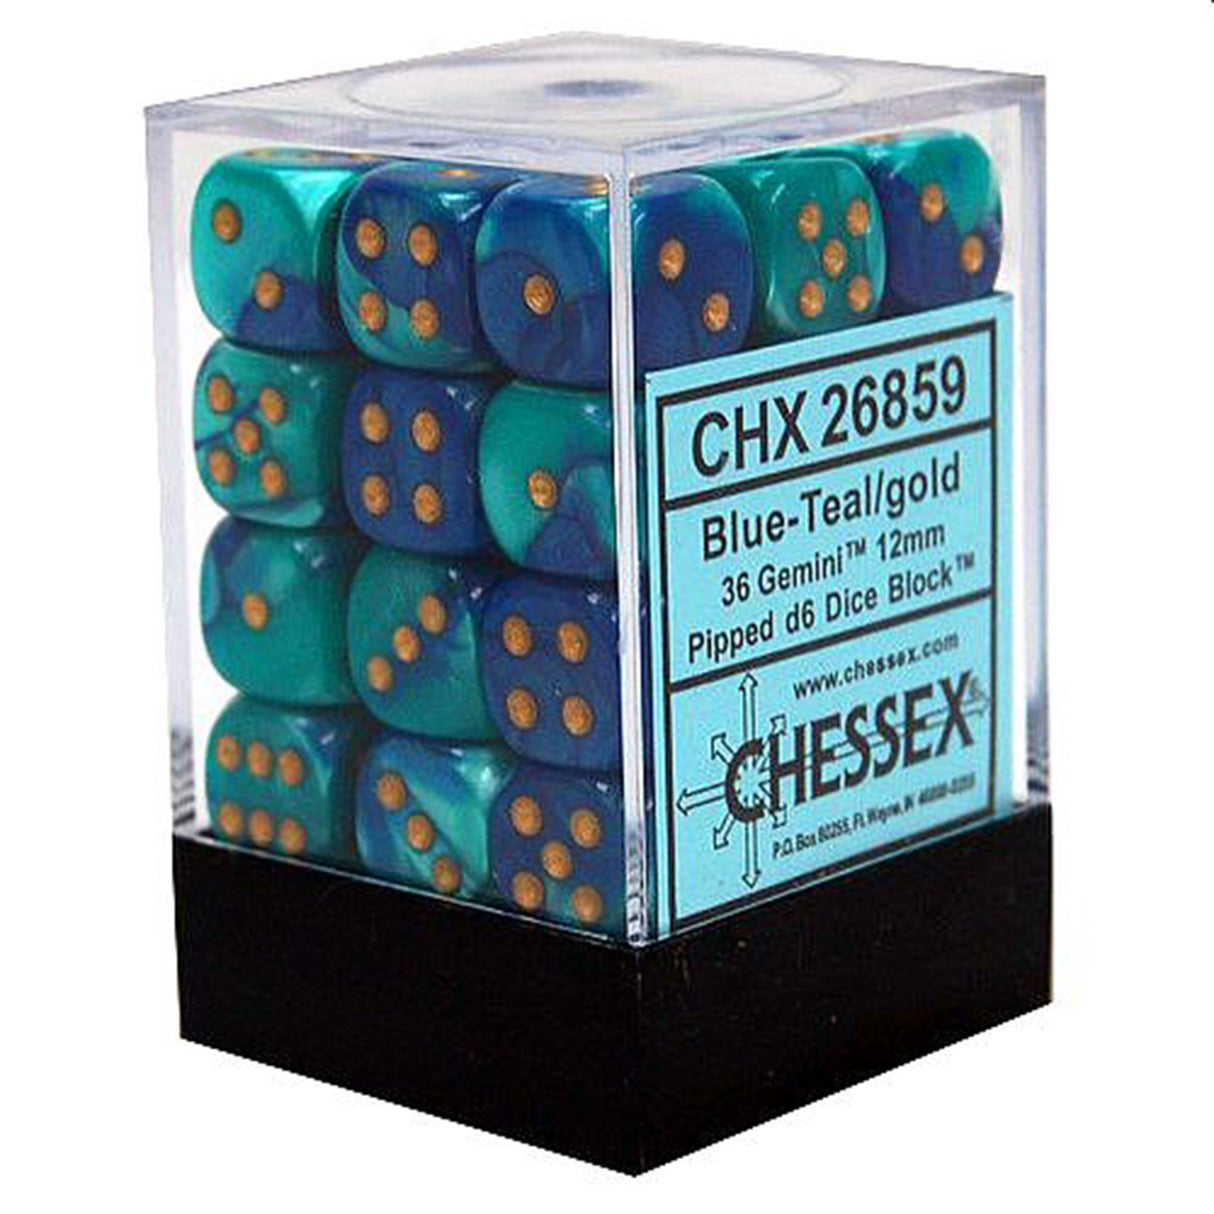 Chessex Dice: Gemini 7: 12mm D6 Blue/Teal/Gold (36)